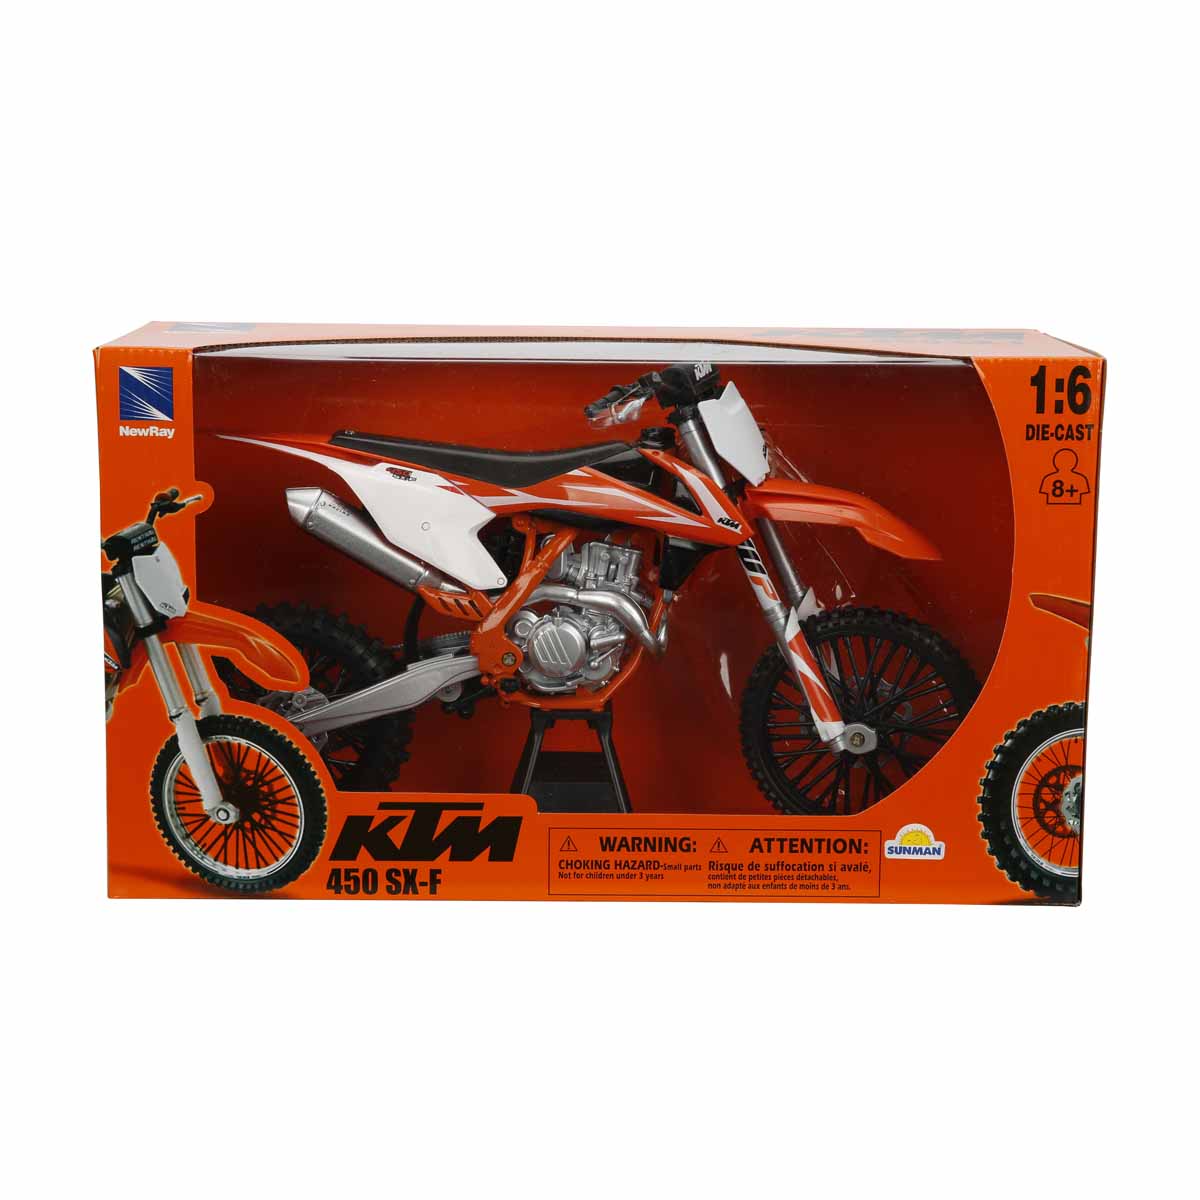 Motocicleta metalica, New Ray, KTM 450 SX-F 2018, 1:6